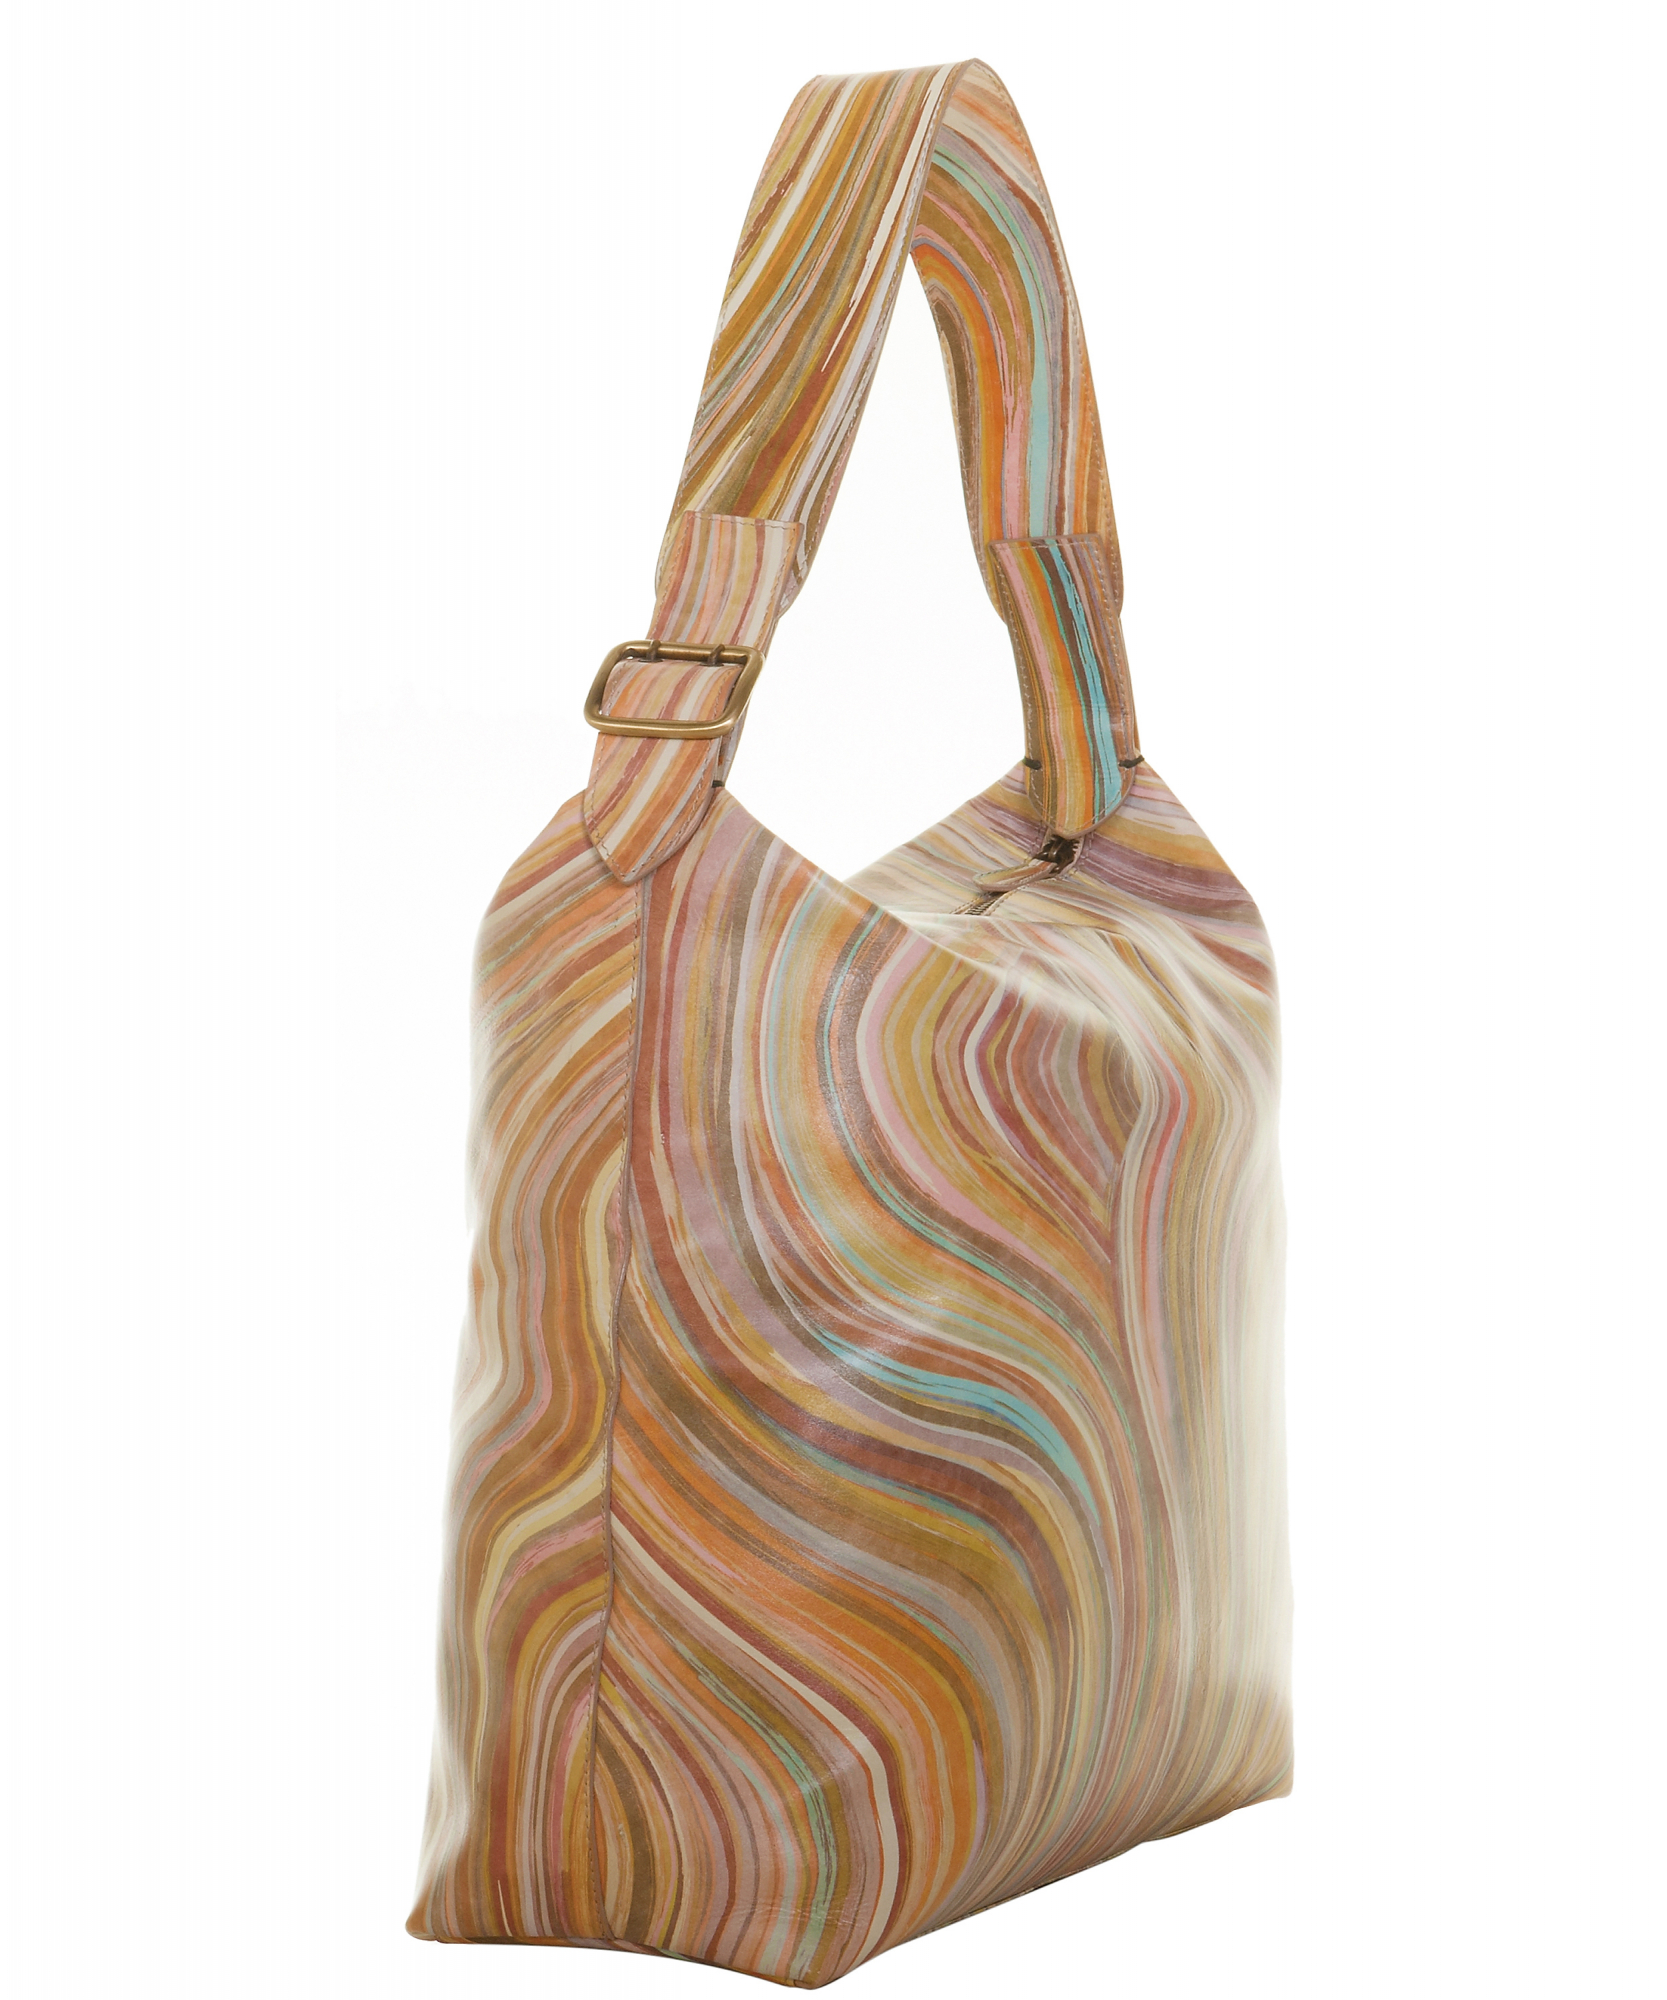 Women's 'Swirl' Print Leather Hobo Bag